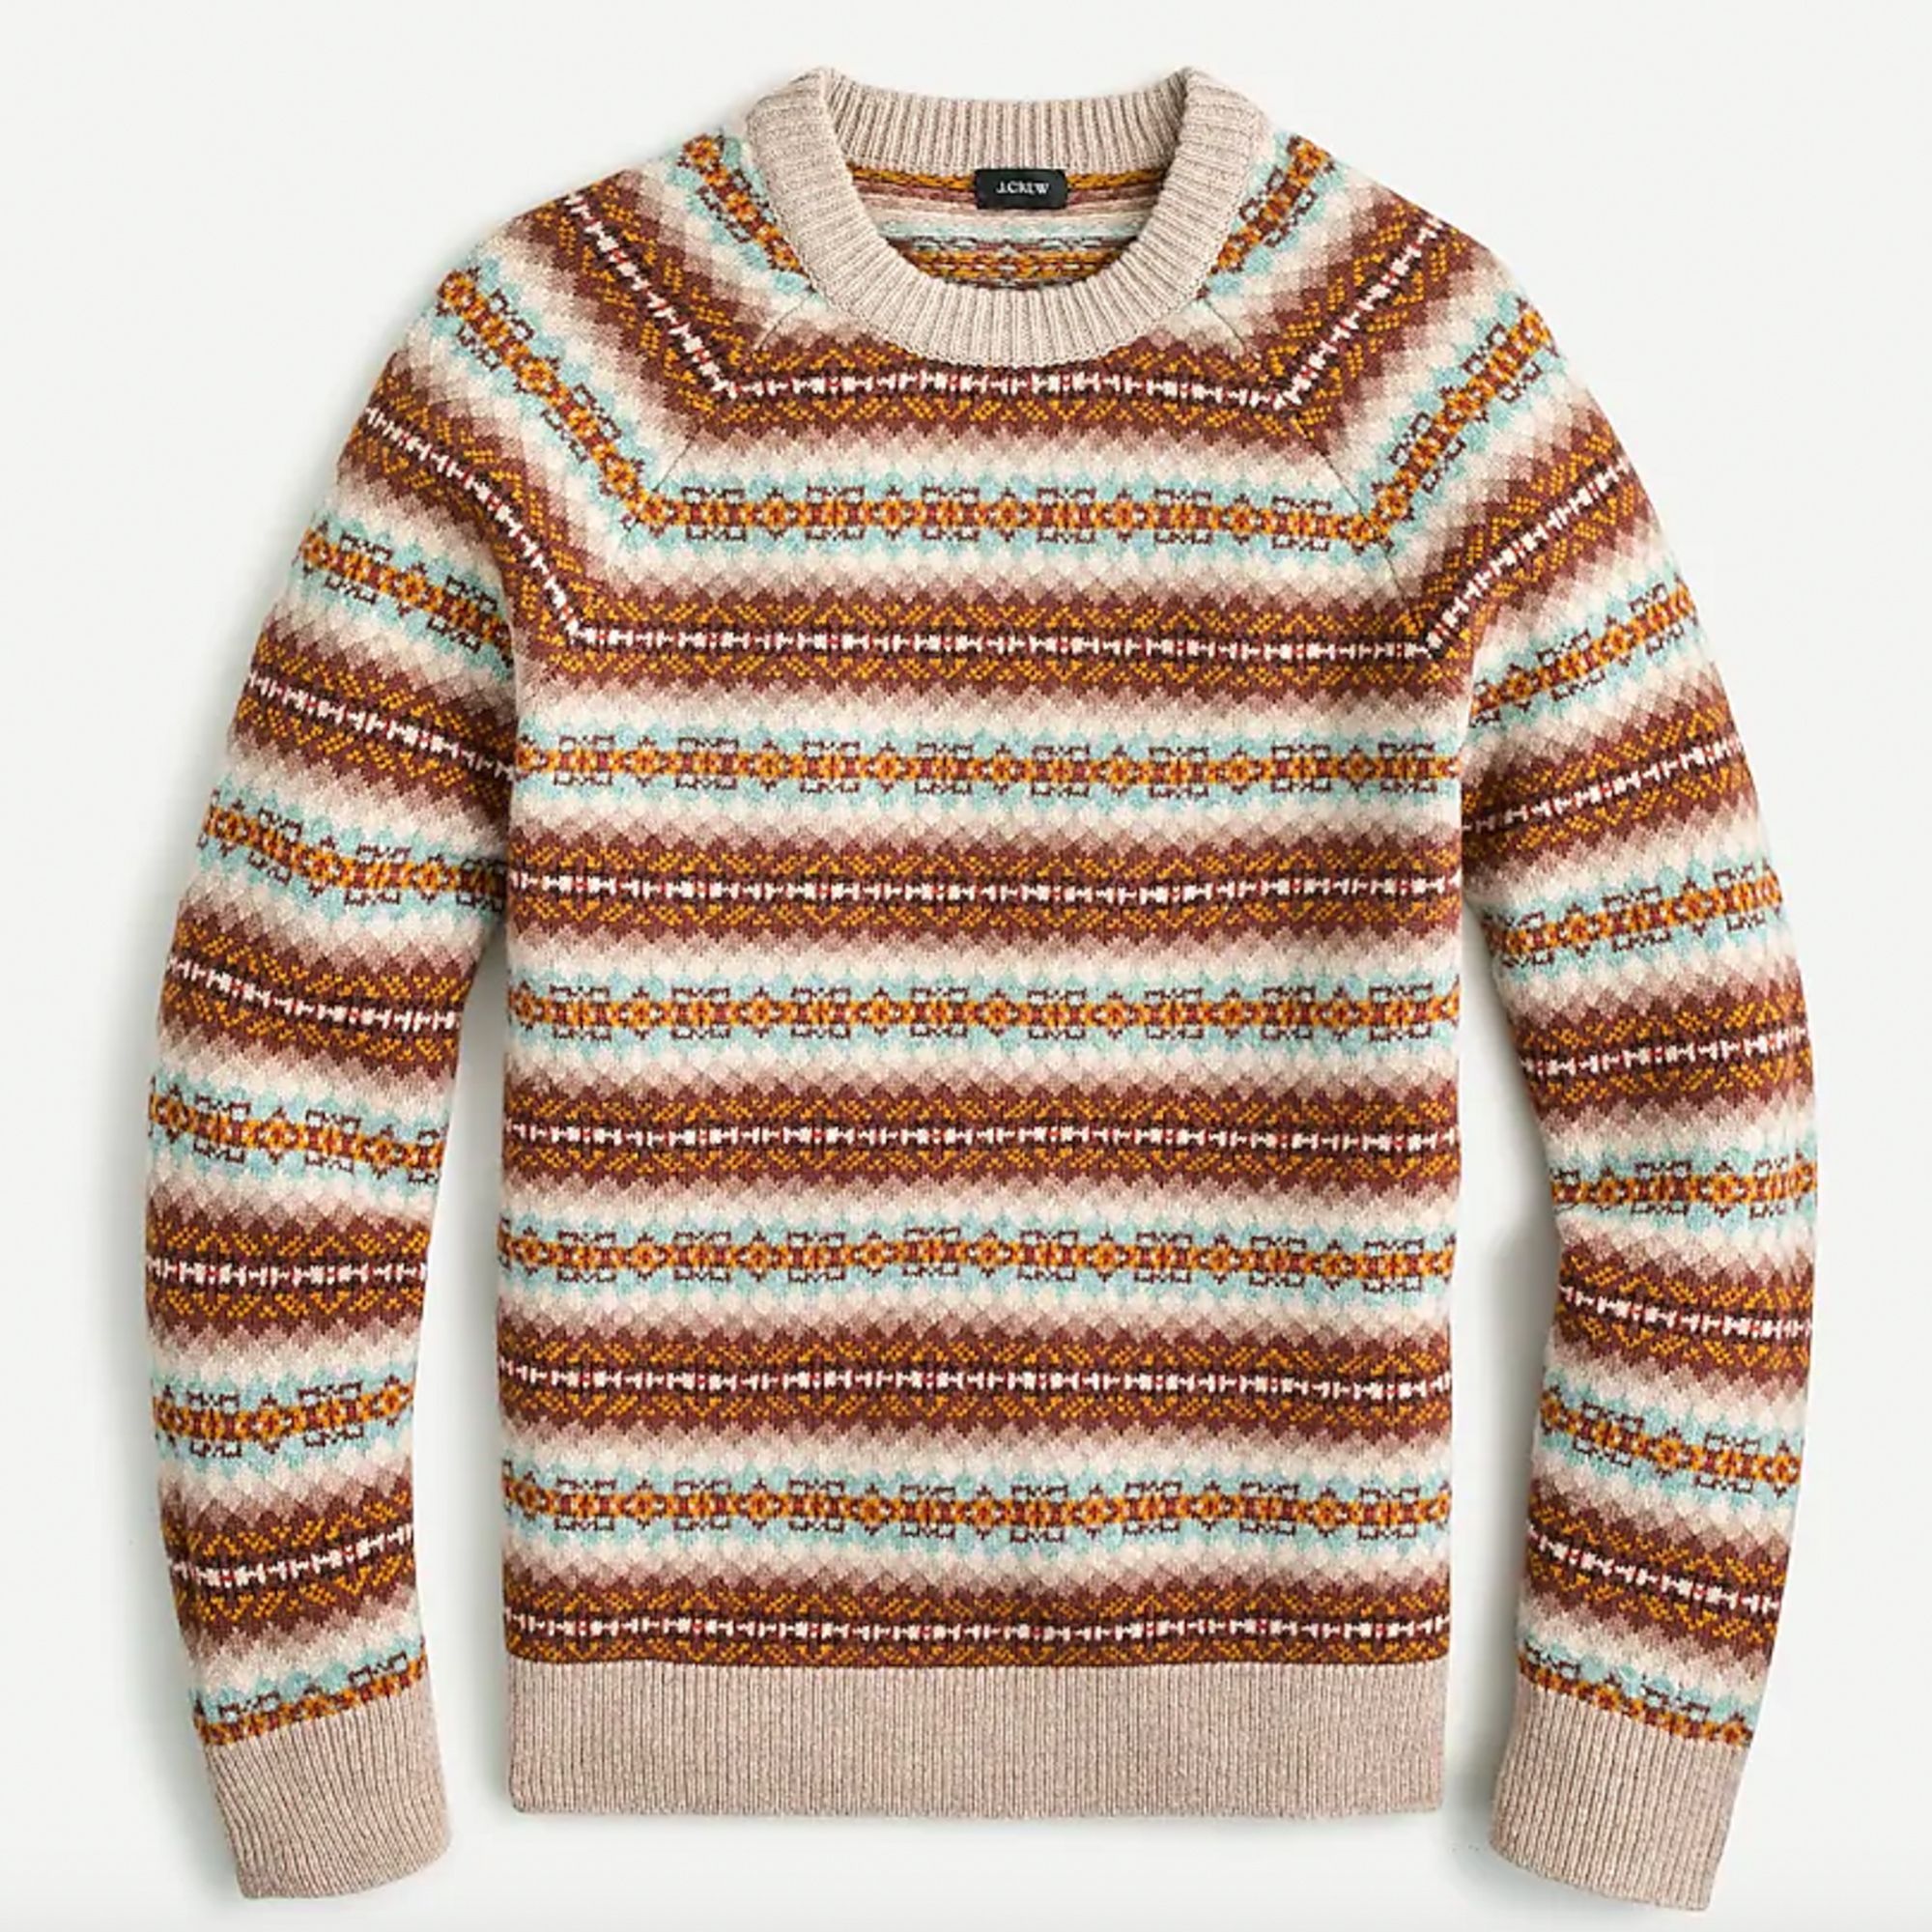 Sweater Men Available in M Men's Pullover Sweater Clothing Mens Clothing Jumpers Pullover Jumpers Crewneck sweater Men's Wool Sweater Tan Sweater Men's Crochet Sweater 